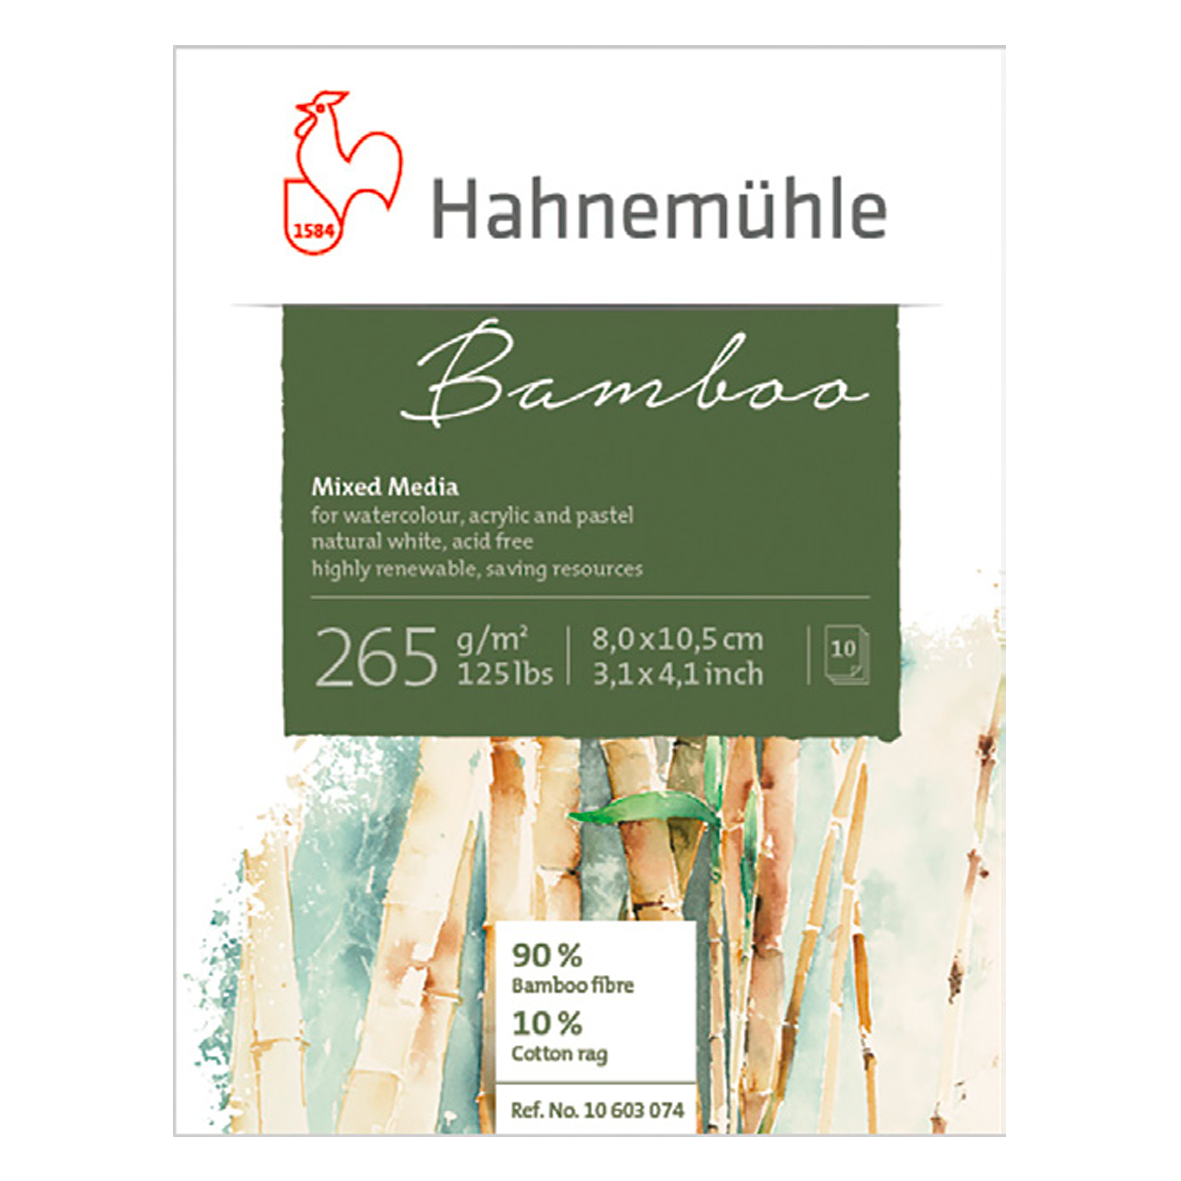 Hahnemühle - Block hoja de bamboo para técnica mixta